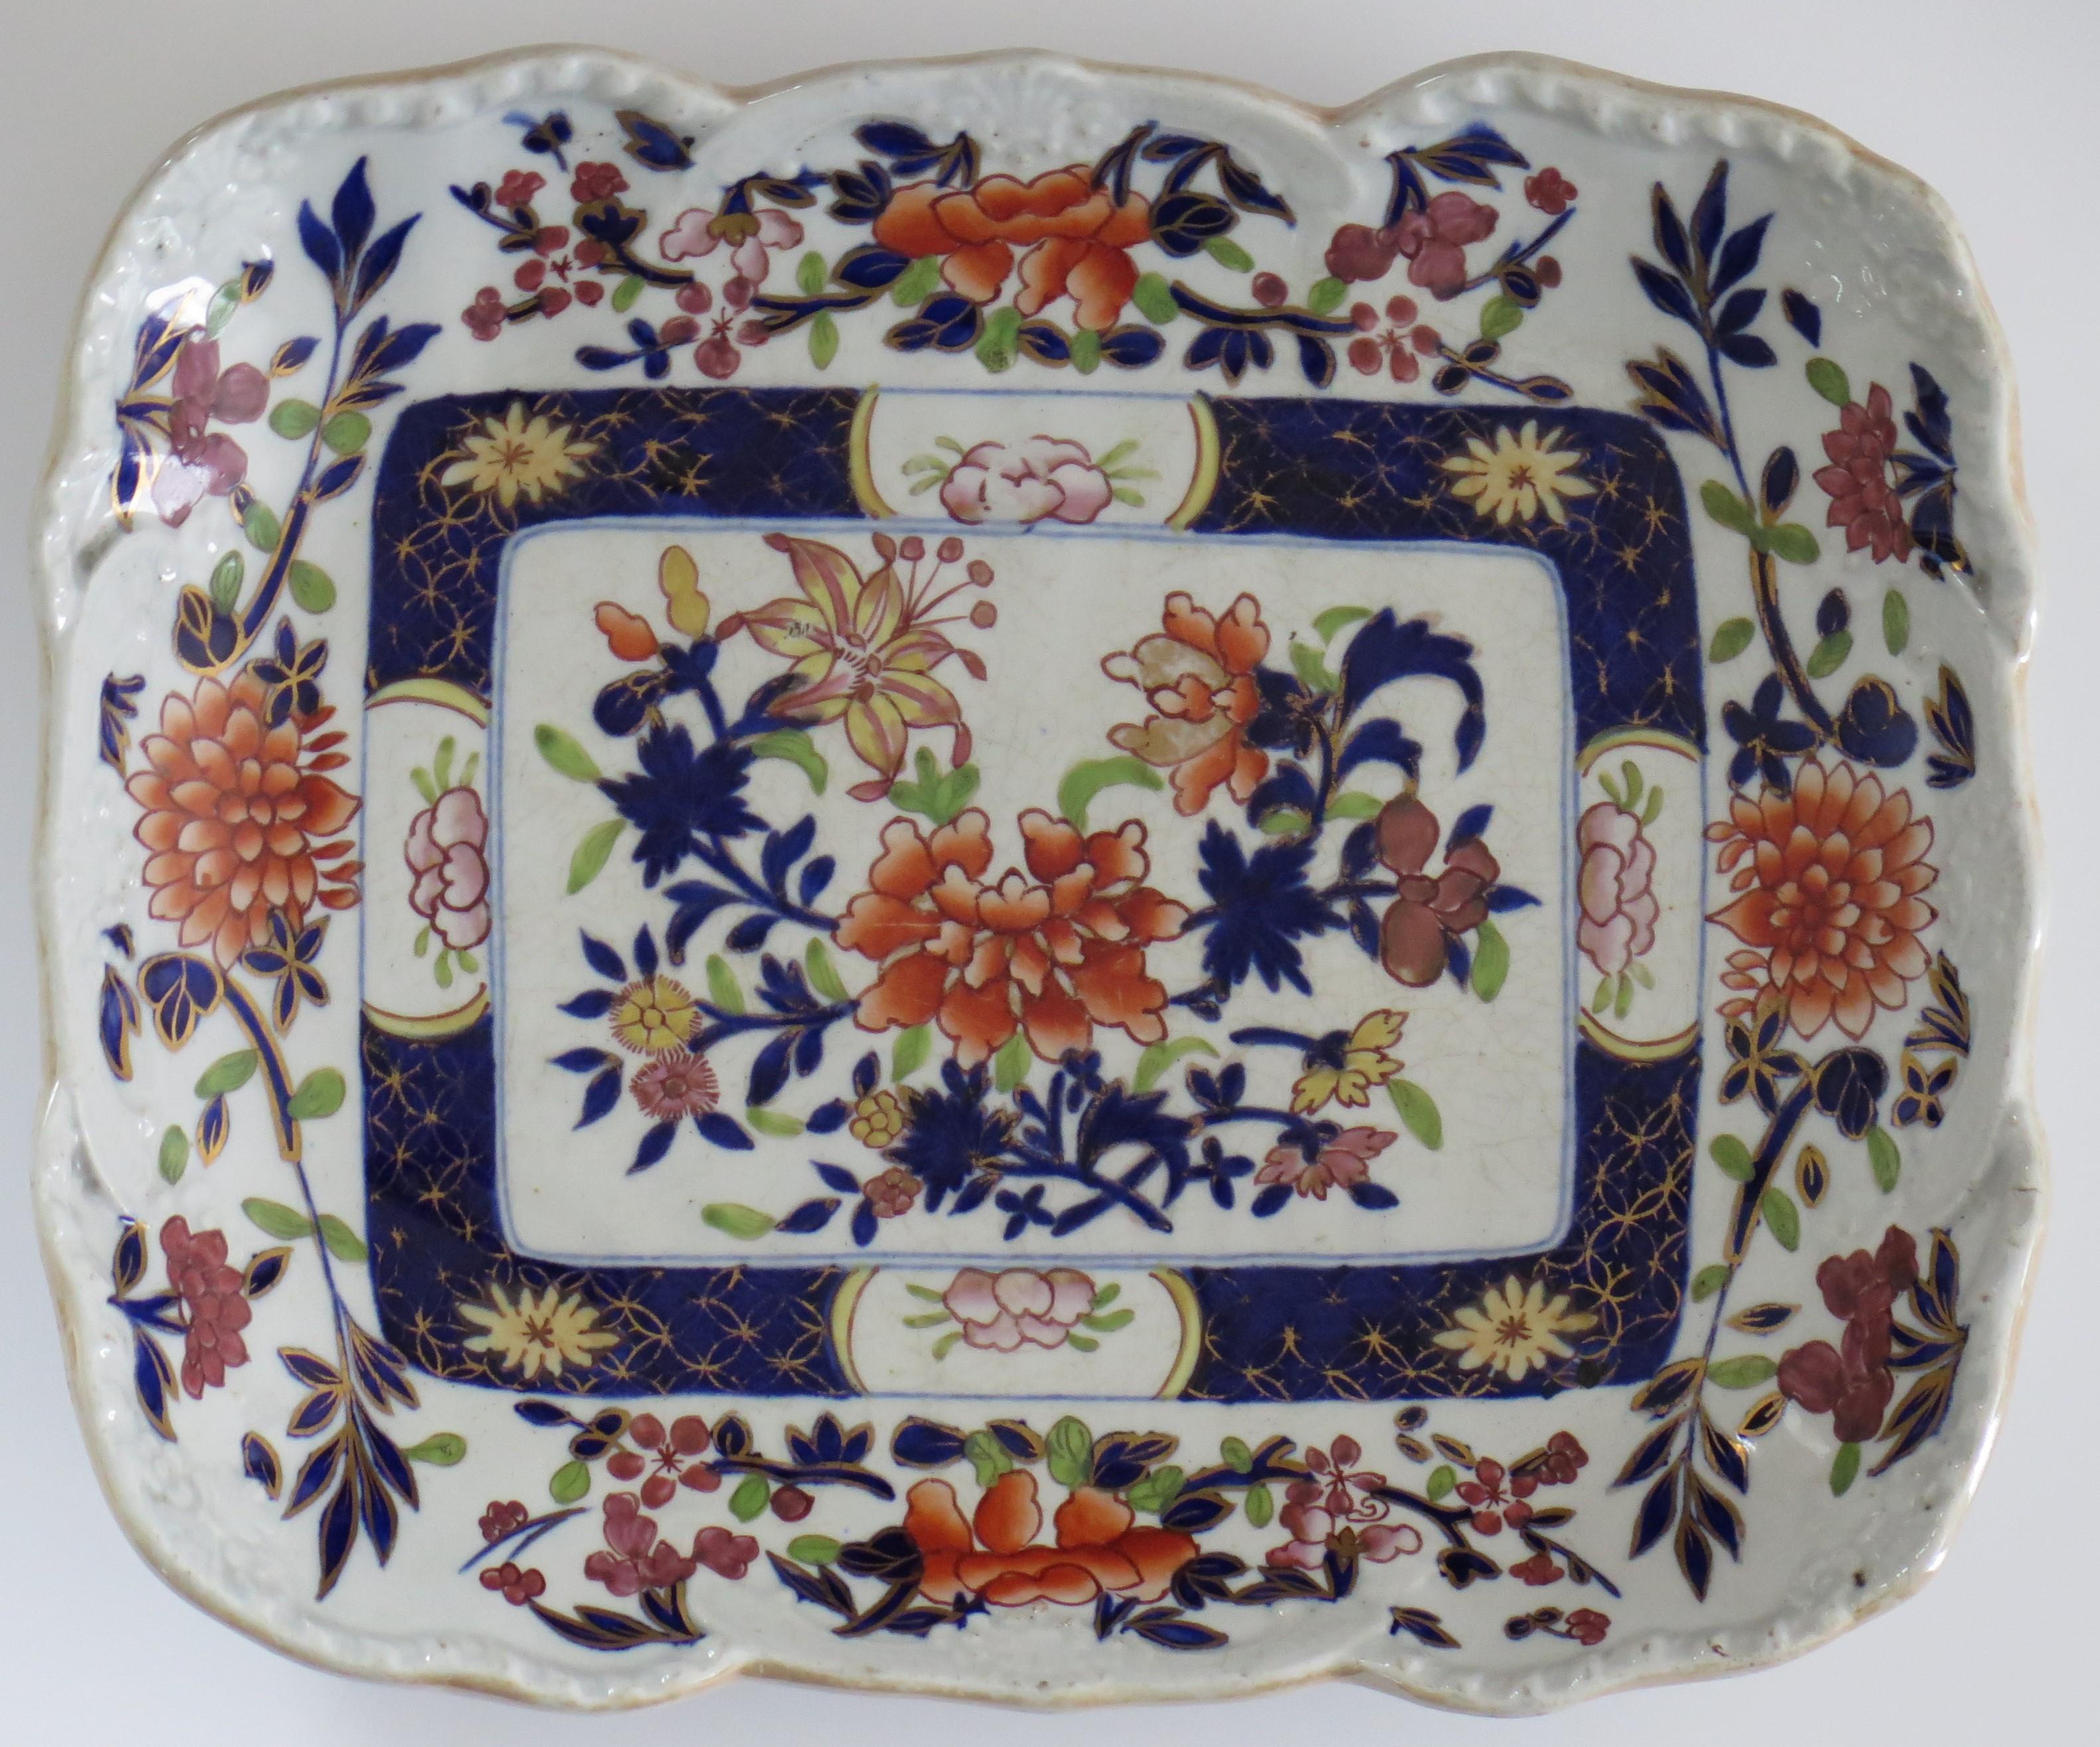 19th Century Georgian Mason's Ironstone Platter in Heavily Floral Japan Pattern, circa 1820